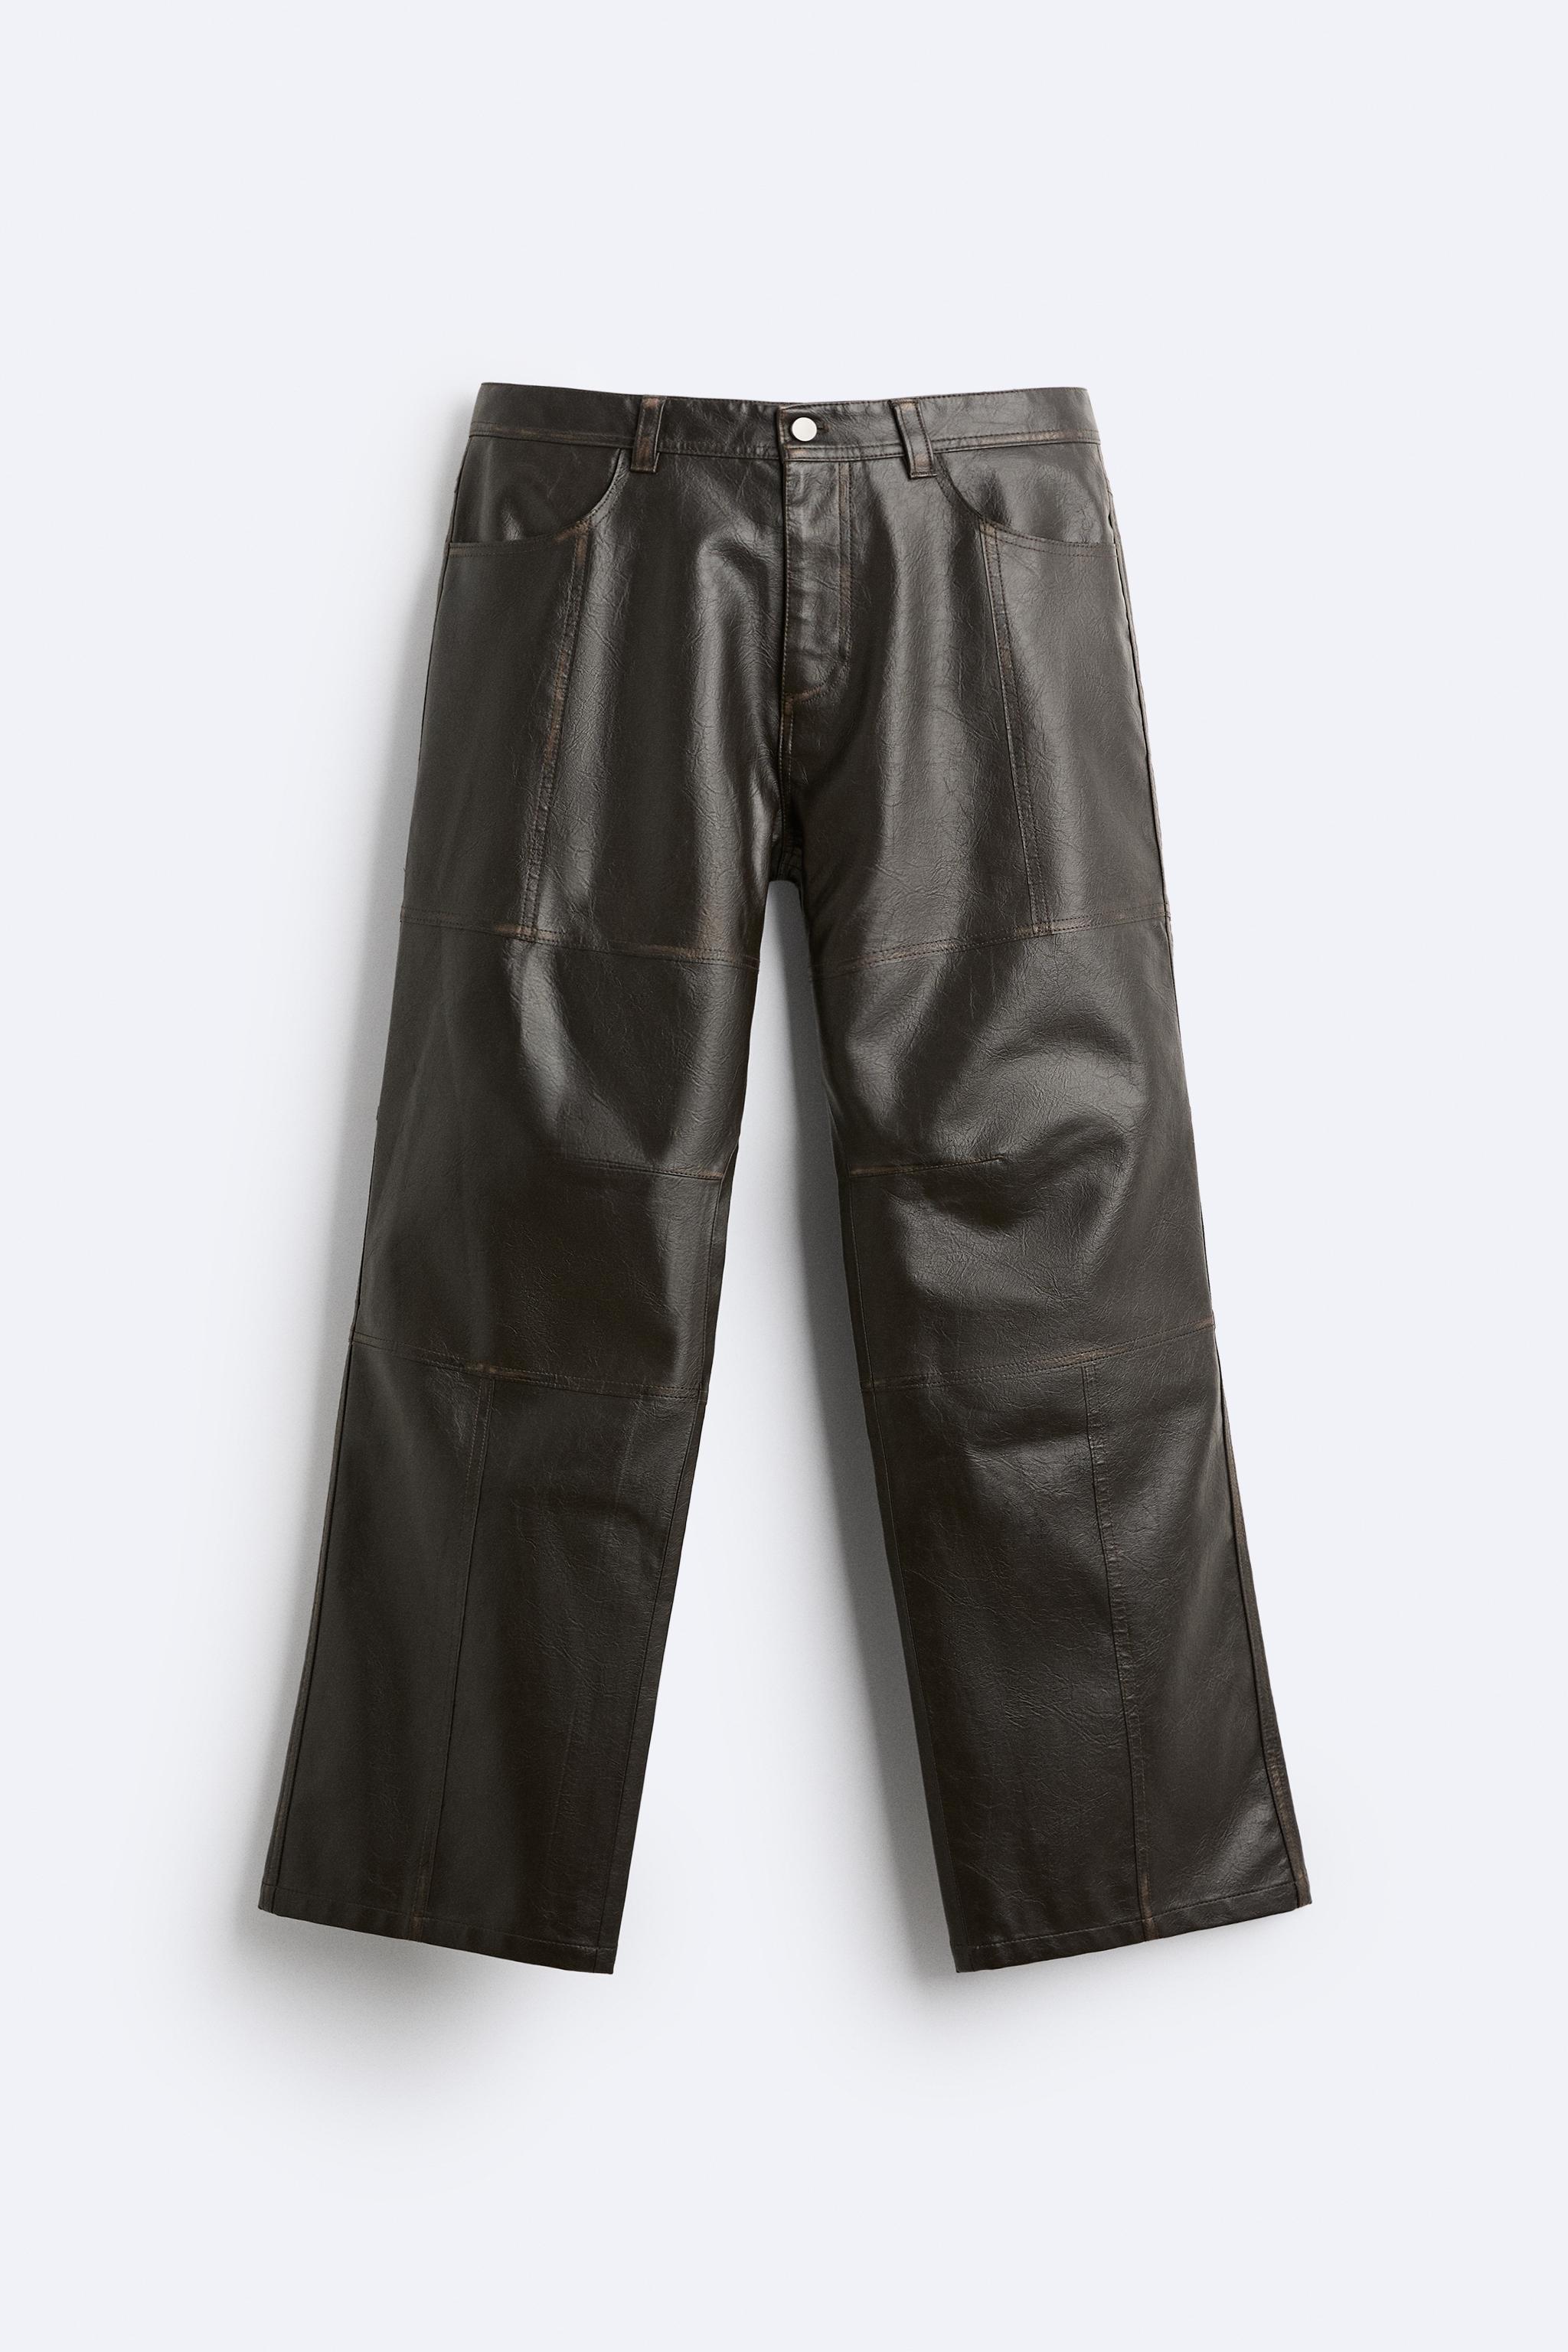 NWOT Zara XS The Francoise Brown Faux Leather Straight Leg Full Length Pants